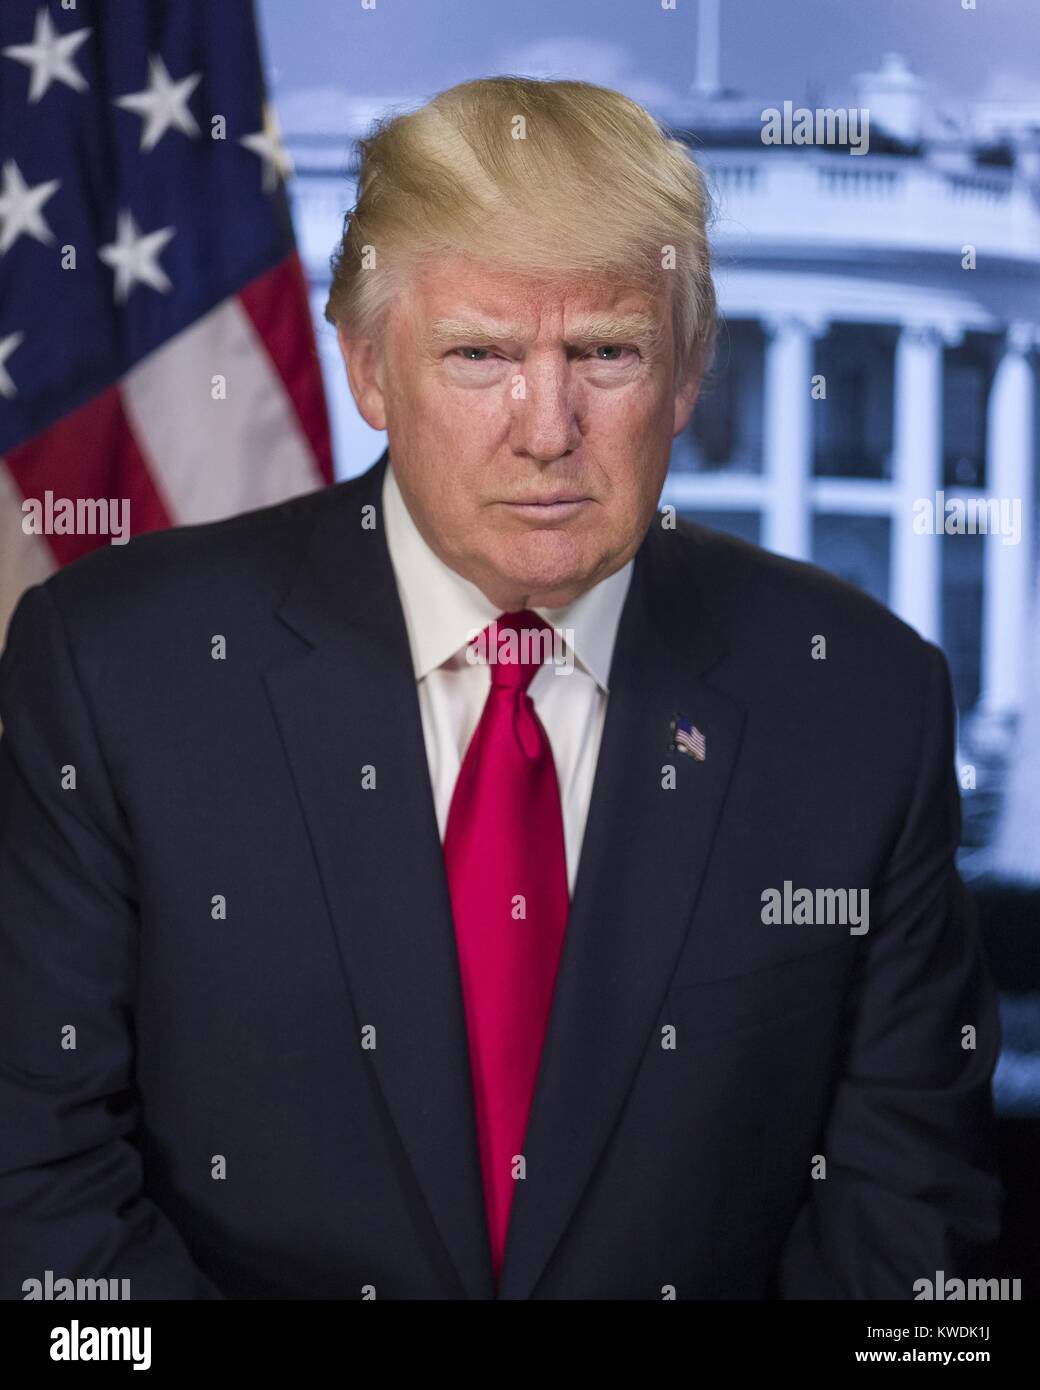 Donald trump con corbata roja fotografías e imágenes de alta resolución -  Alamy